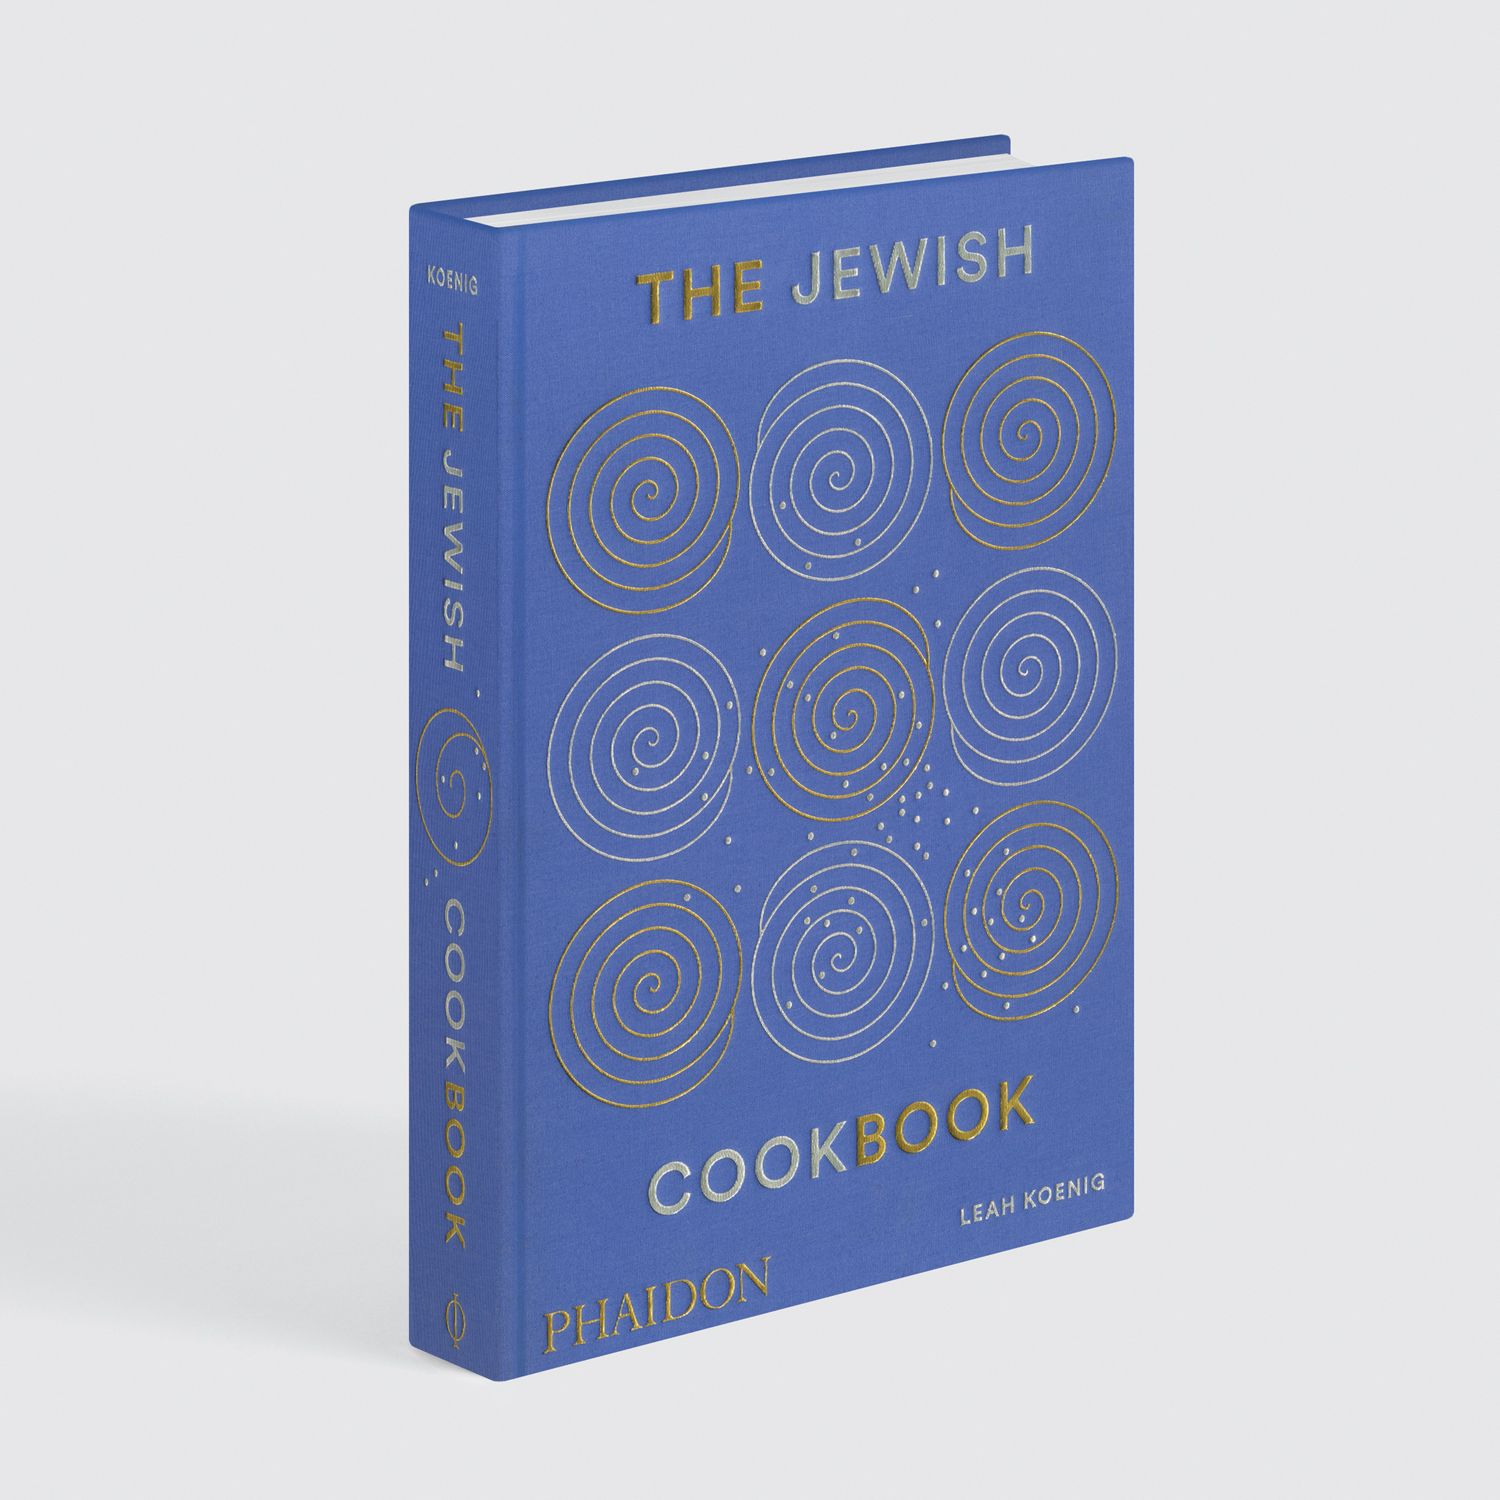 The Jewish Cookbook by Leah Koenig
